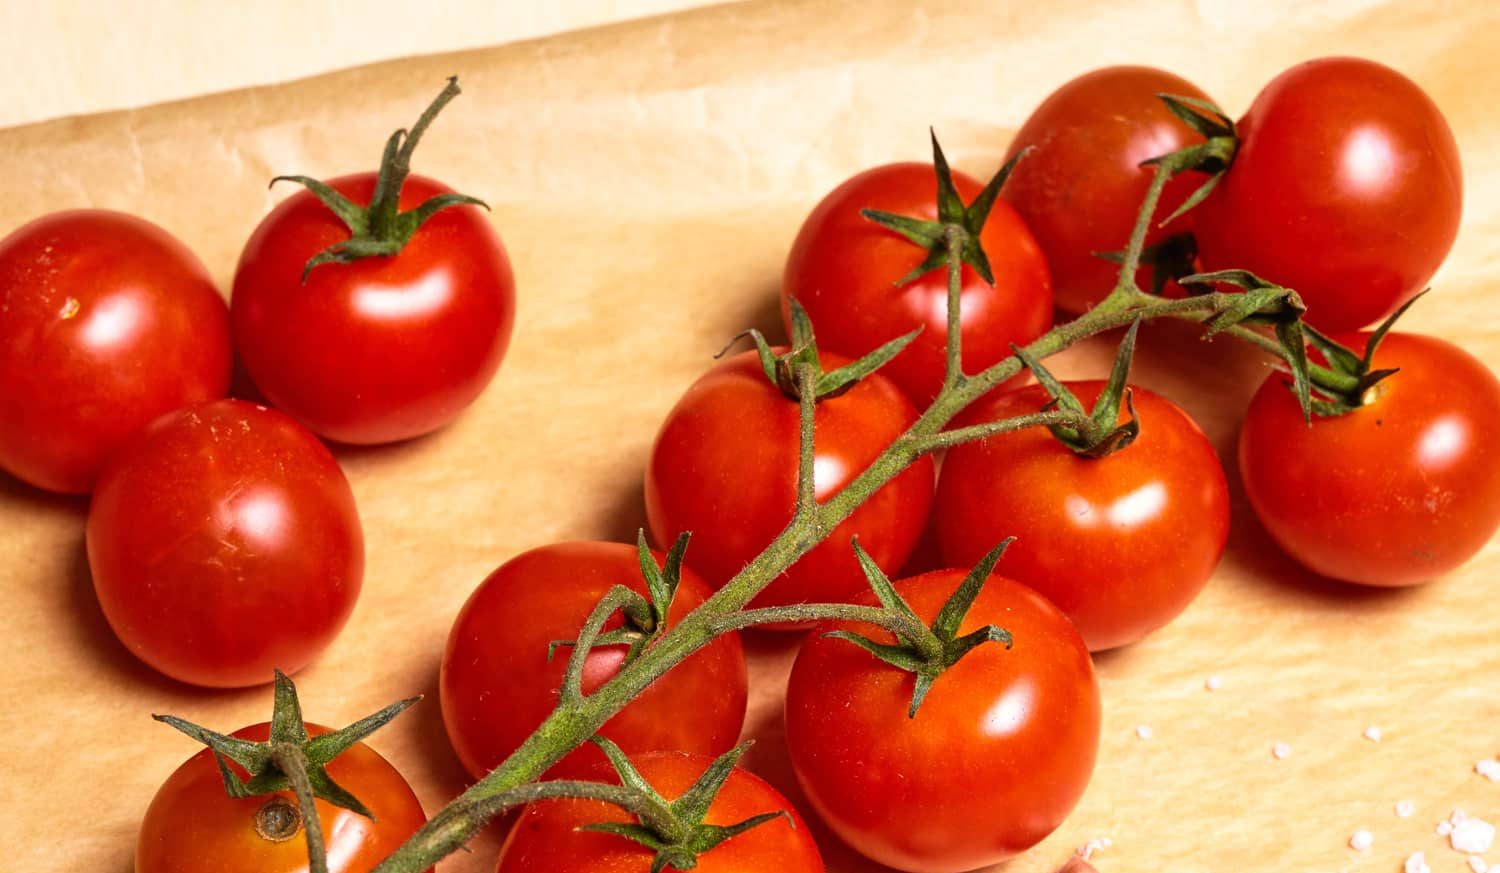 Tomato health benefits